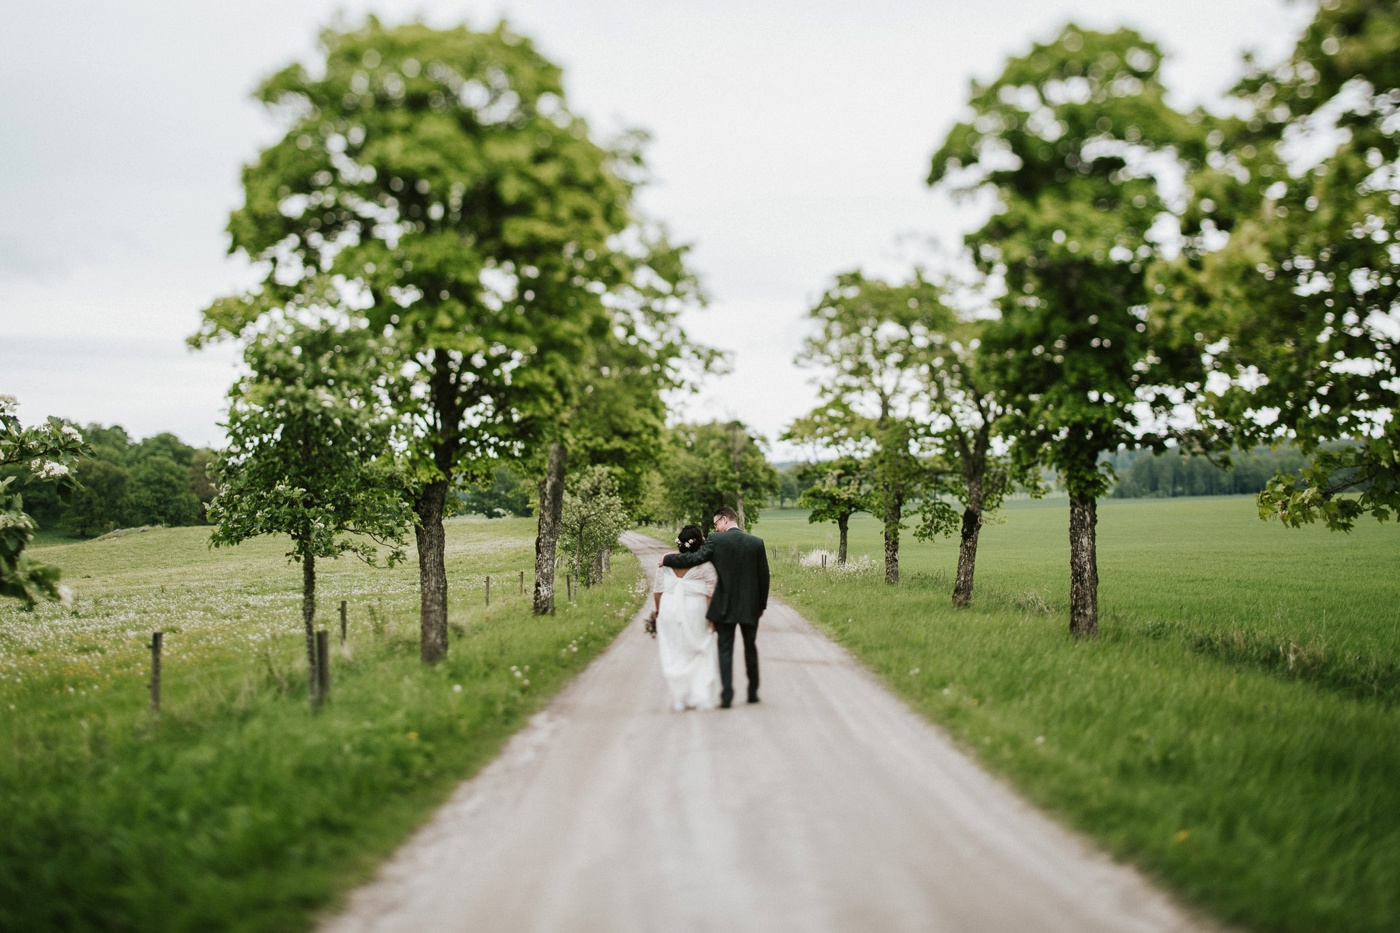 Torbjorn&Paula_Swedish-countryside-rustic-relaxed-wedding_Melbourne-Wedding-Photography_65